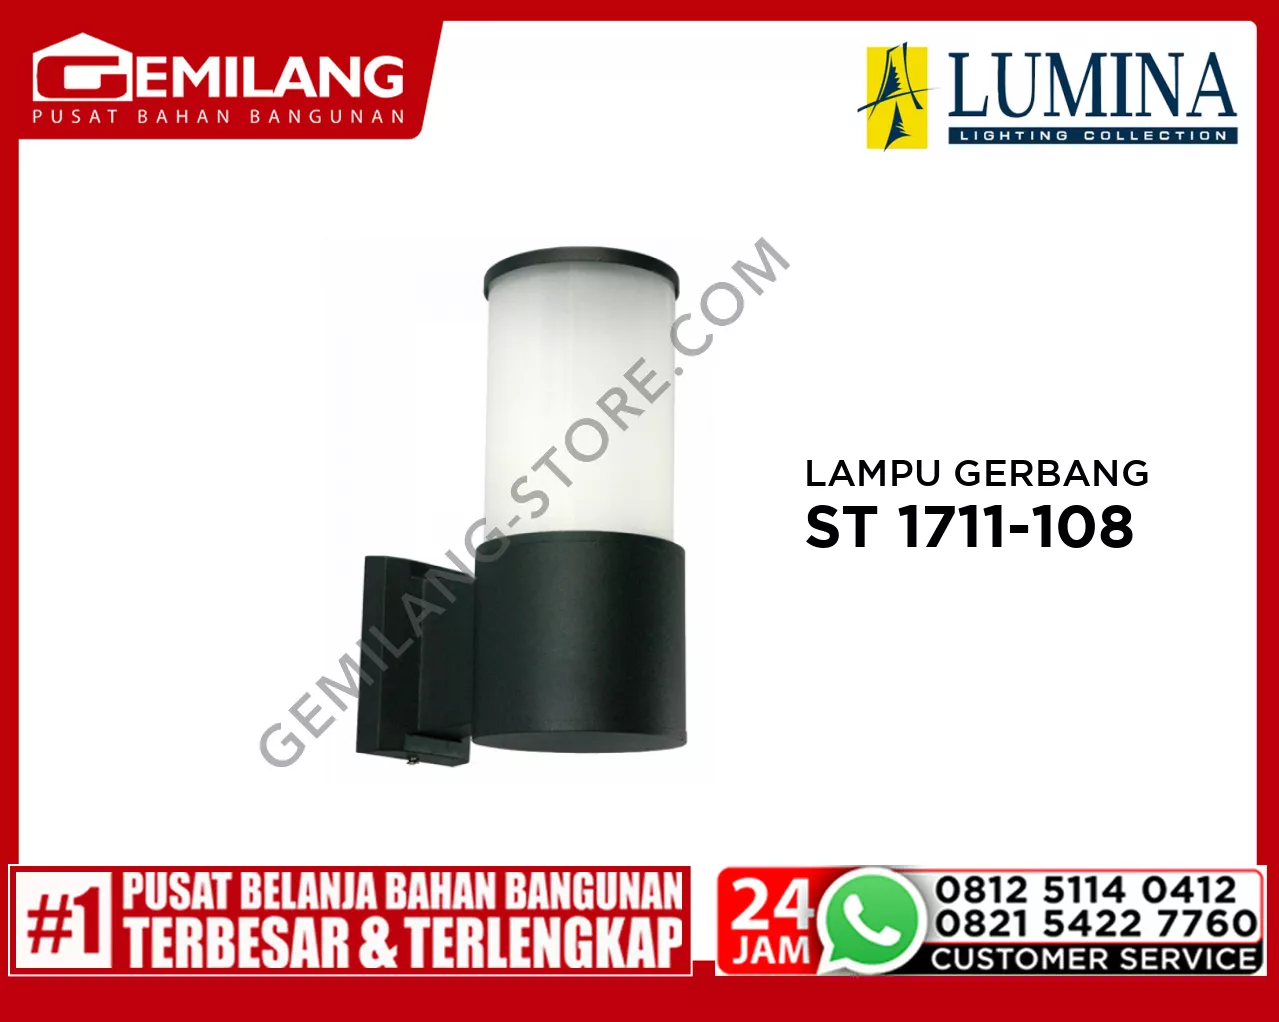 LAMPU GERBANG ST 1711-108 BK